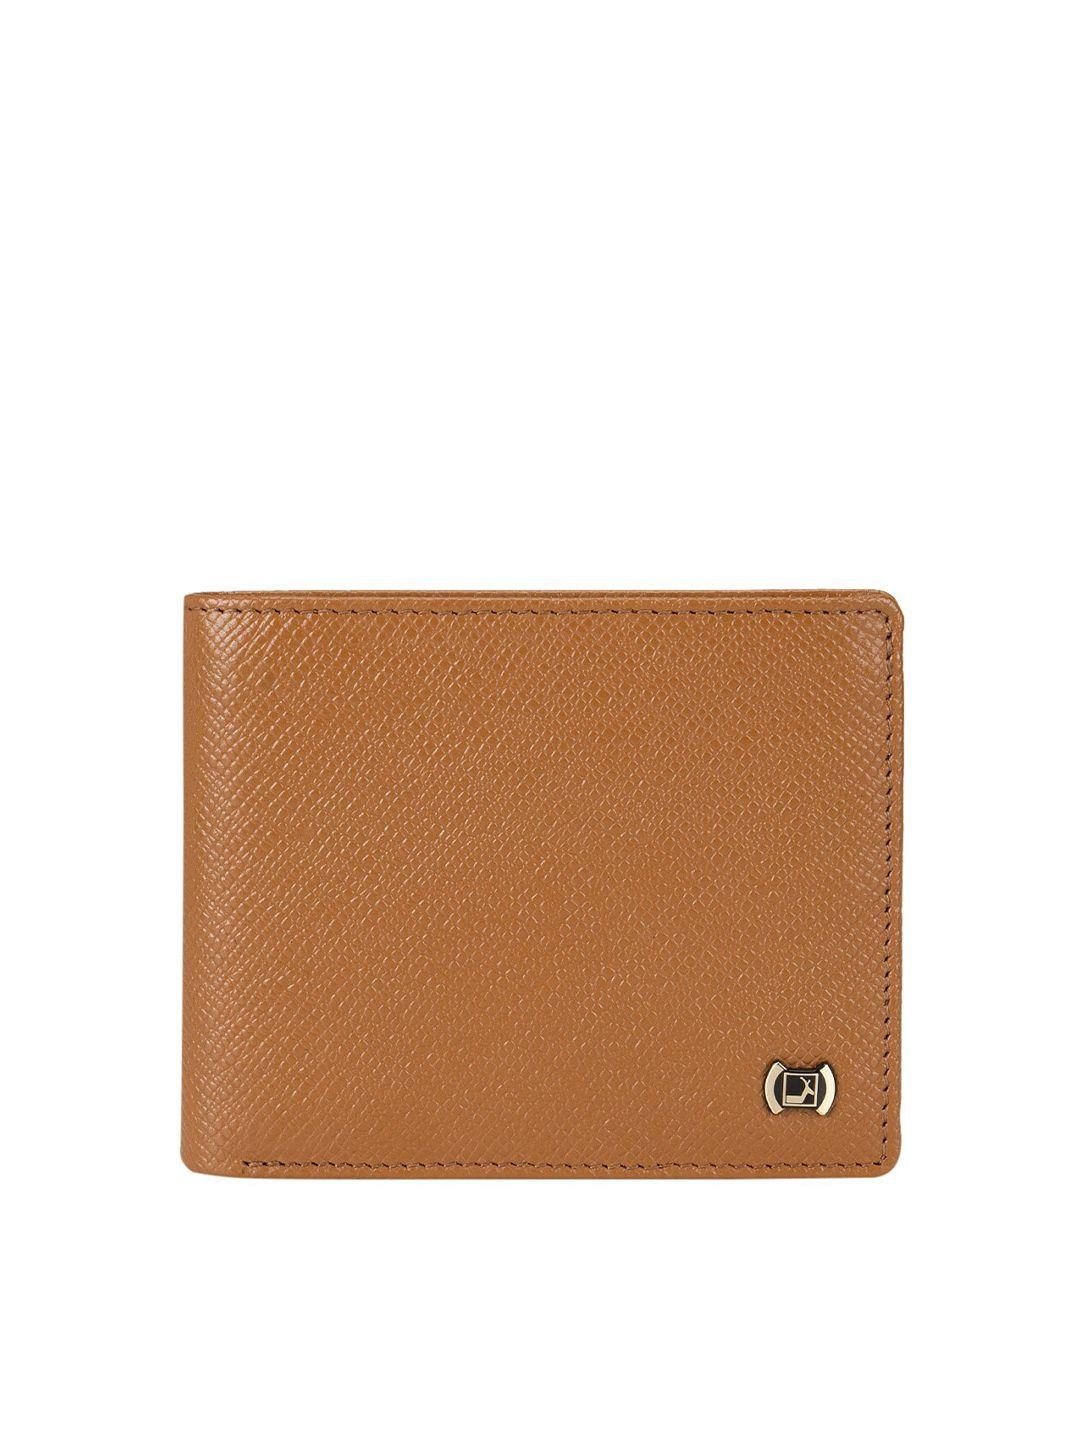 da milano men brown textured leather three fold wallet